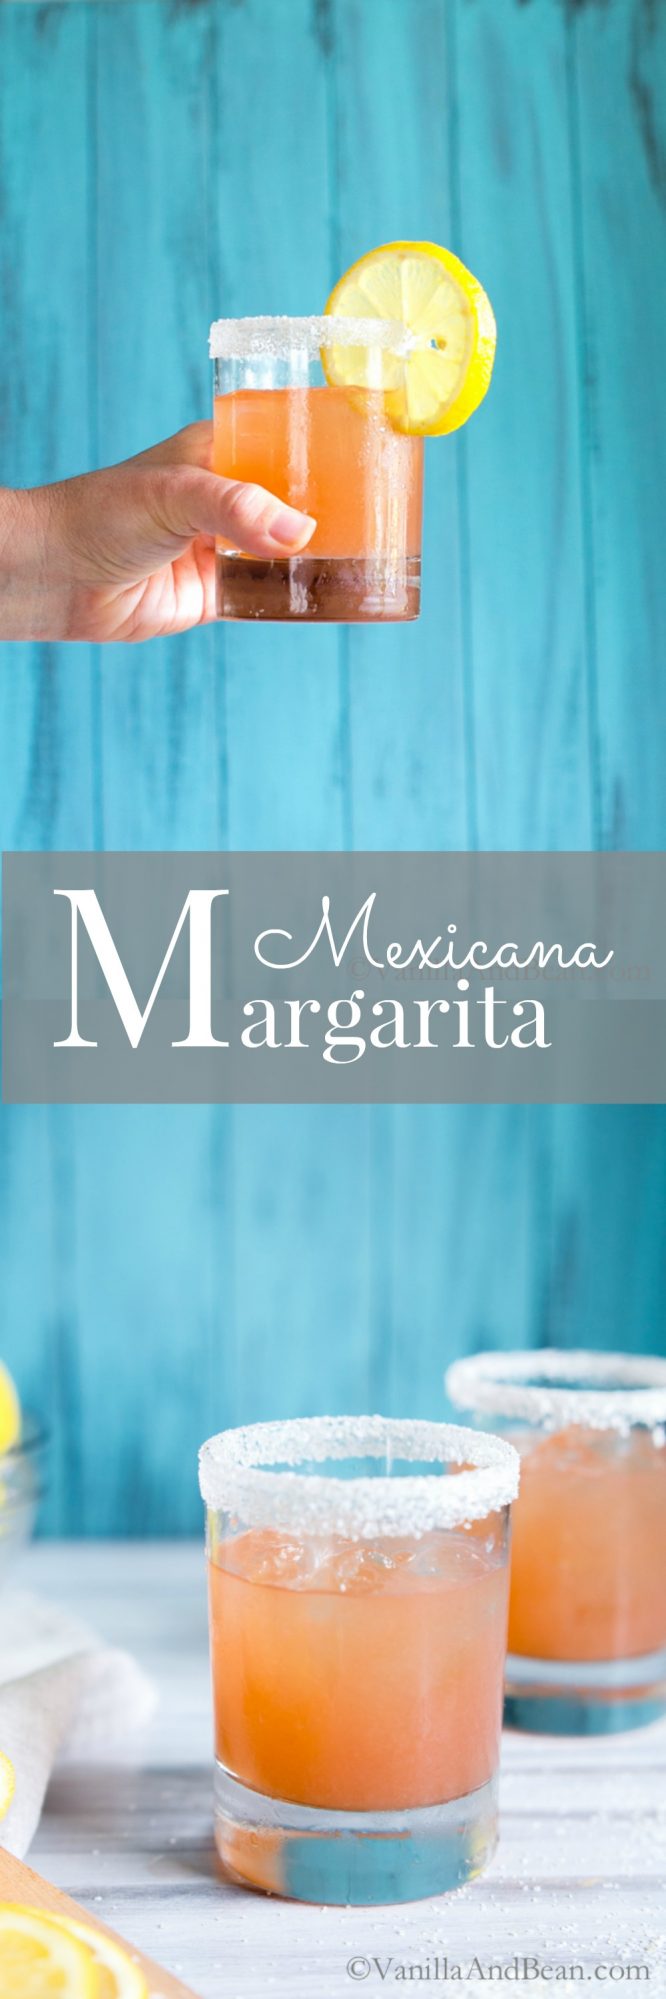 Mexicana Margarita | Vanilla And Bean